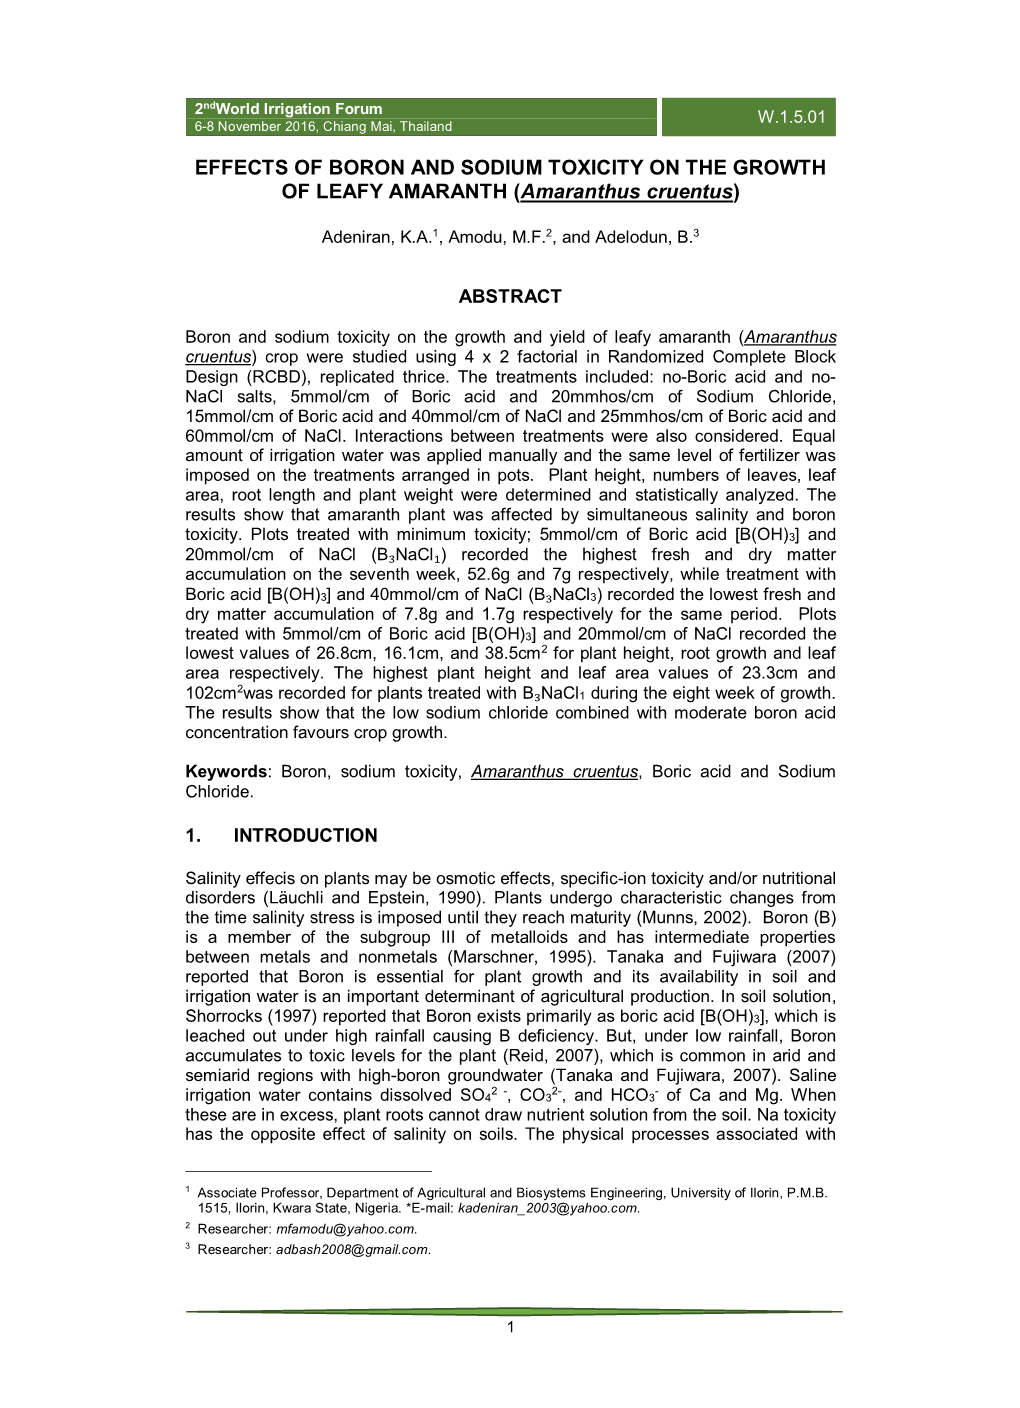 EFFECTS of BORON and SODIUM TOXICITY on the GROWTH of LEAFY AMARANTH (Amaranthus Cruentus)